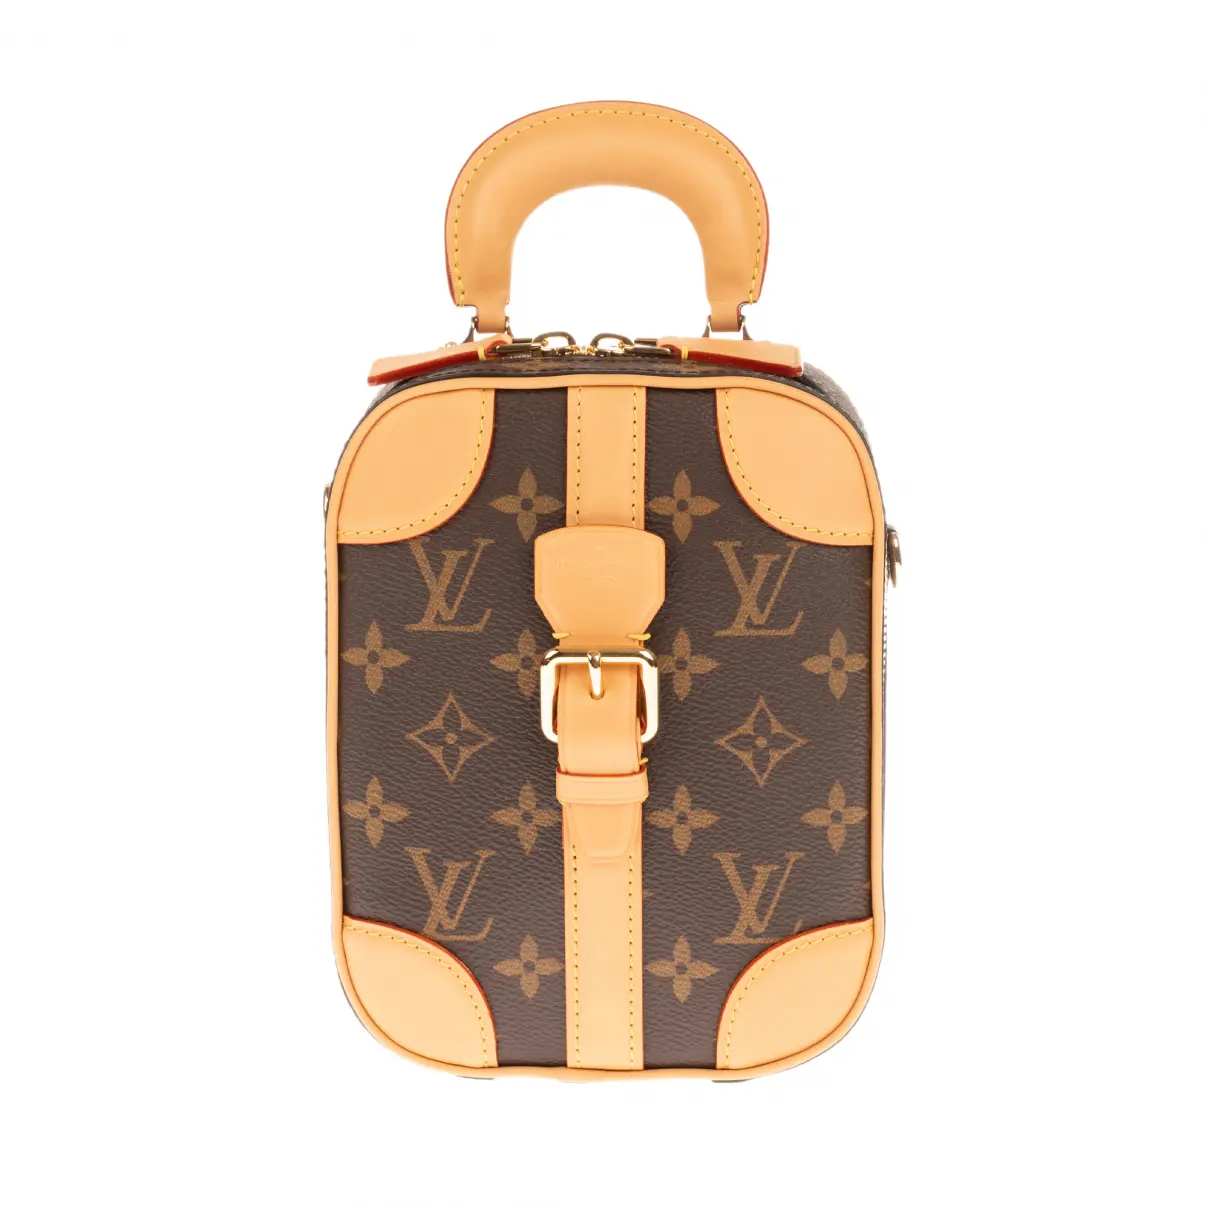 Valisette cloth handbag Louis Vuitton